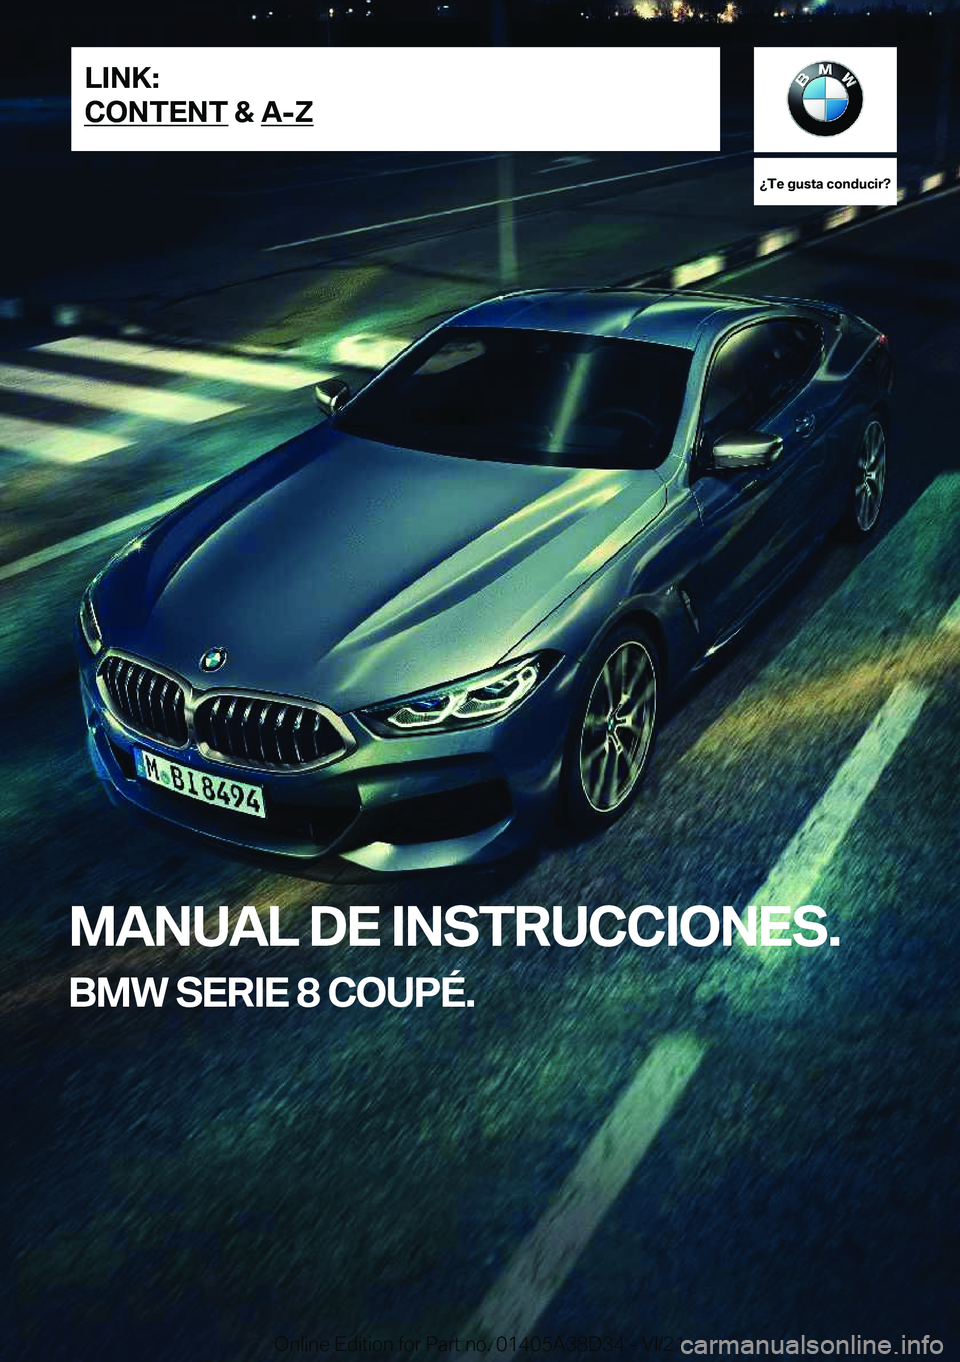 BMW 8 SERIES 2022  Manuales de Empleo (in Spanish) ��T�e��g�u�s�t�a��c�o�n�d�u�c�i�r� 
�M�A�N�U�A�L��D�E��I�N�S�T�R�U�C�C�I�O�N�E�S�.
�B�M�W��S�E�R�I�E��8��C�O�U�P�